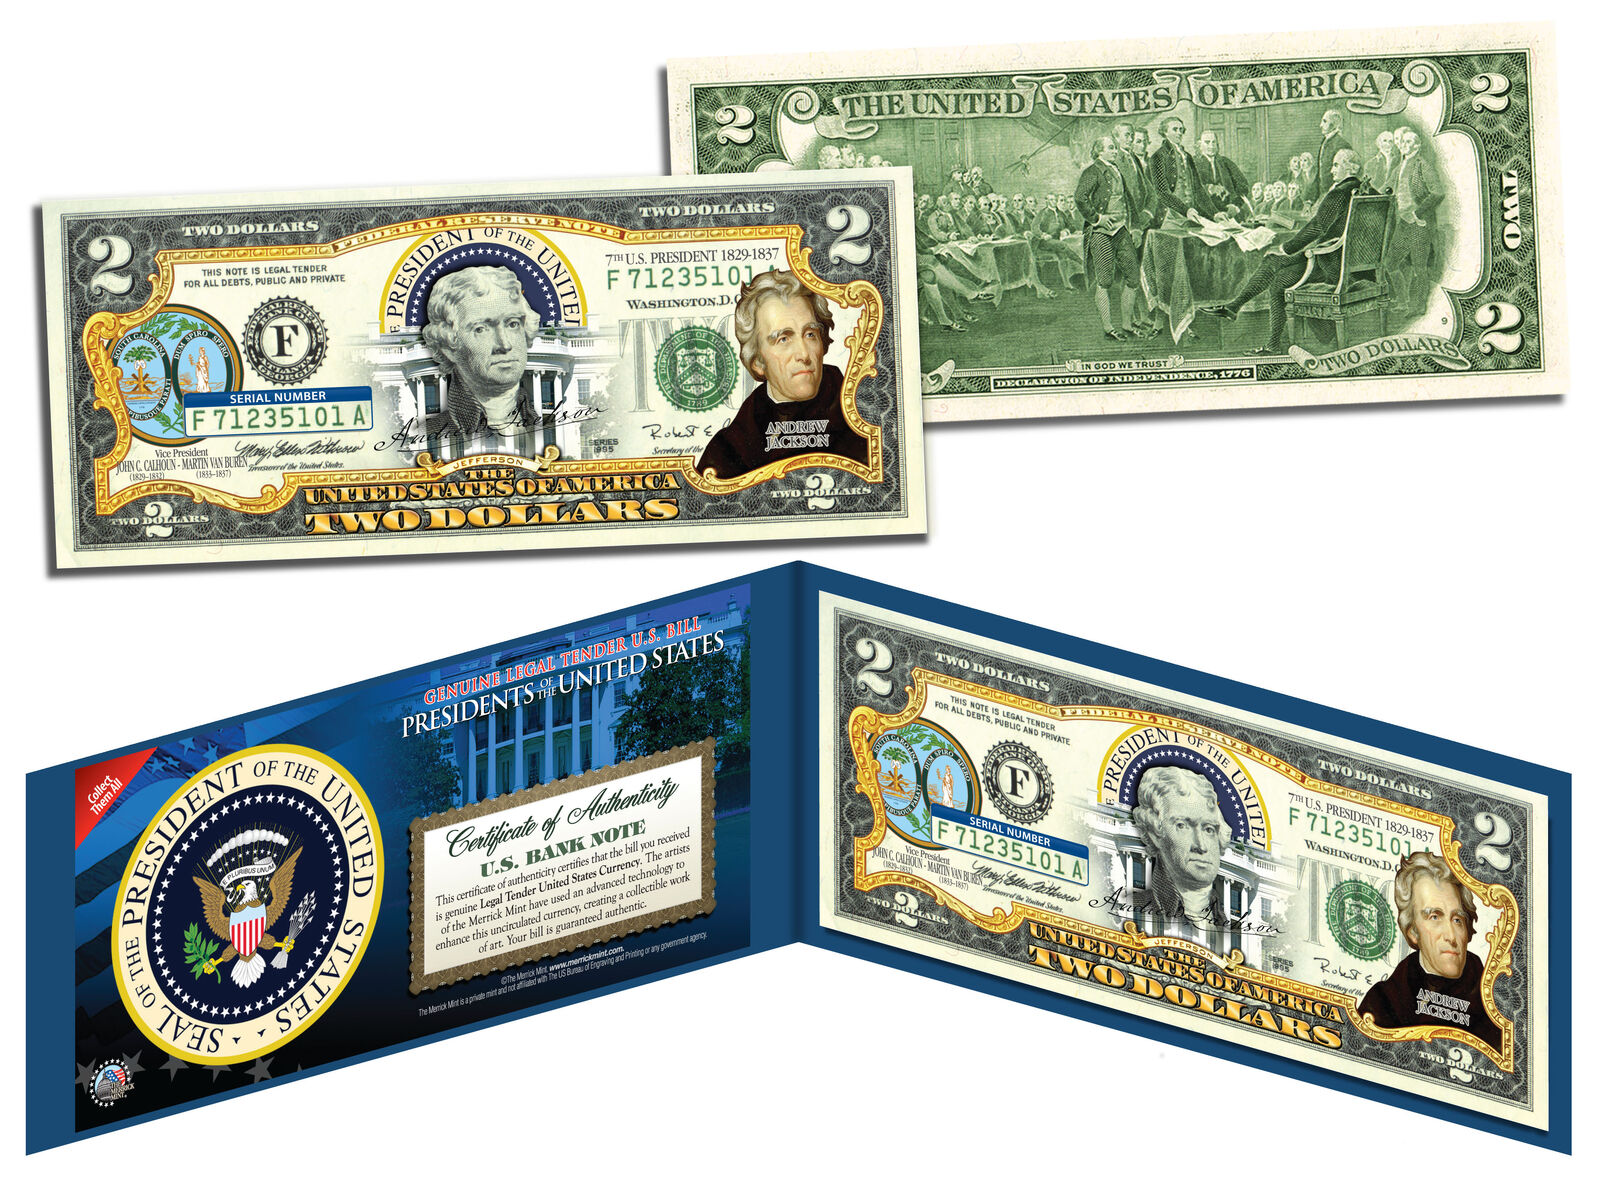 ANDREW JACKSON * 7th U.S. President * Colorized $2 Bill US Genuine Legal Tender